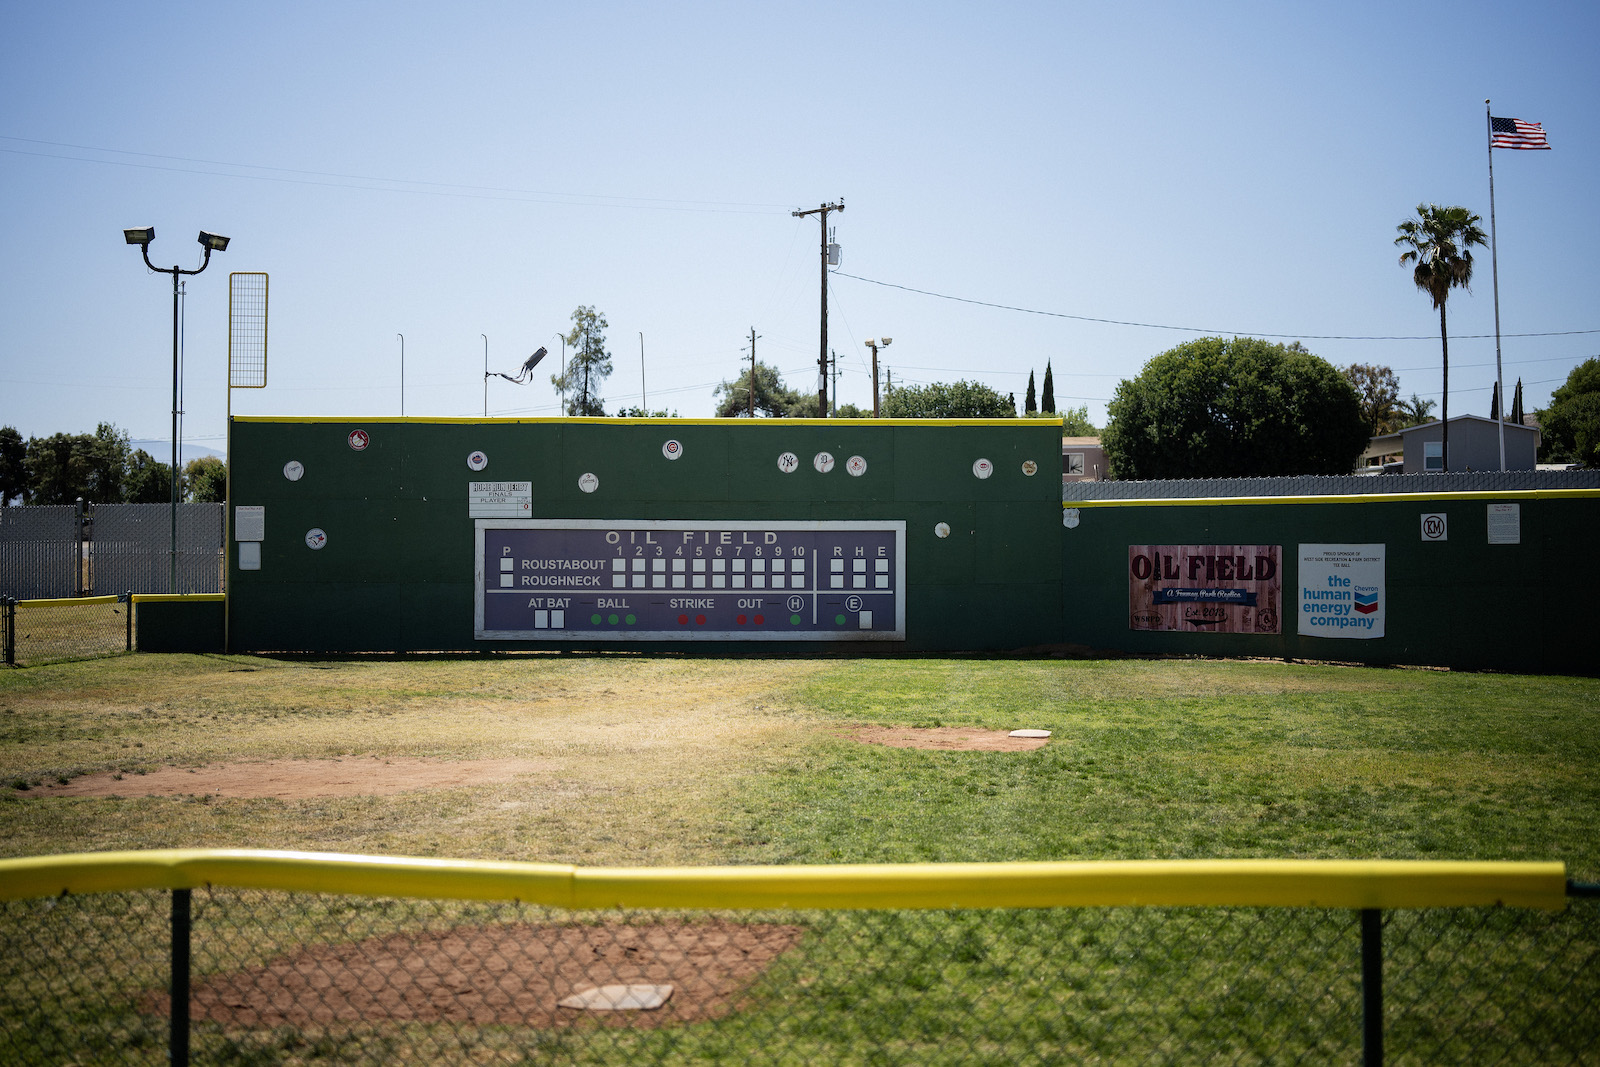 A baseball field